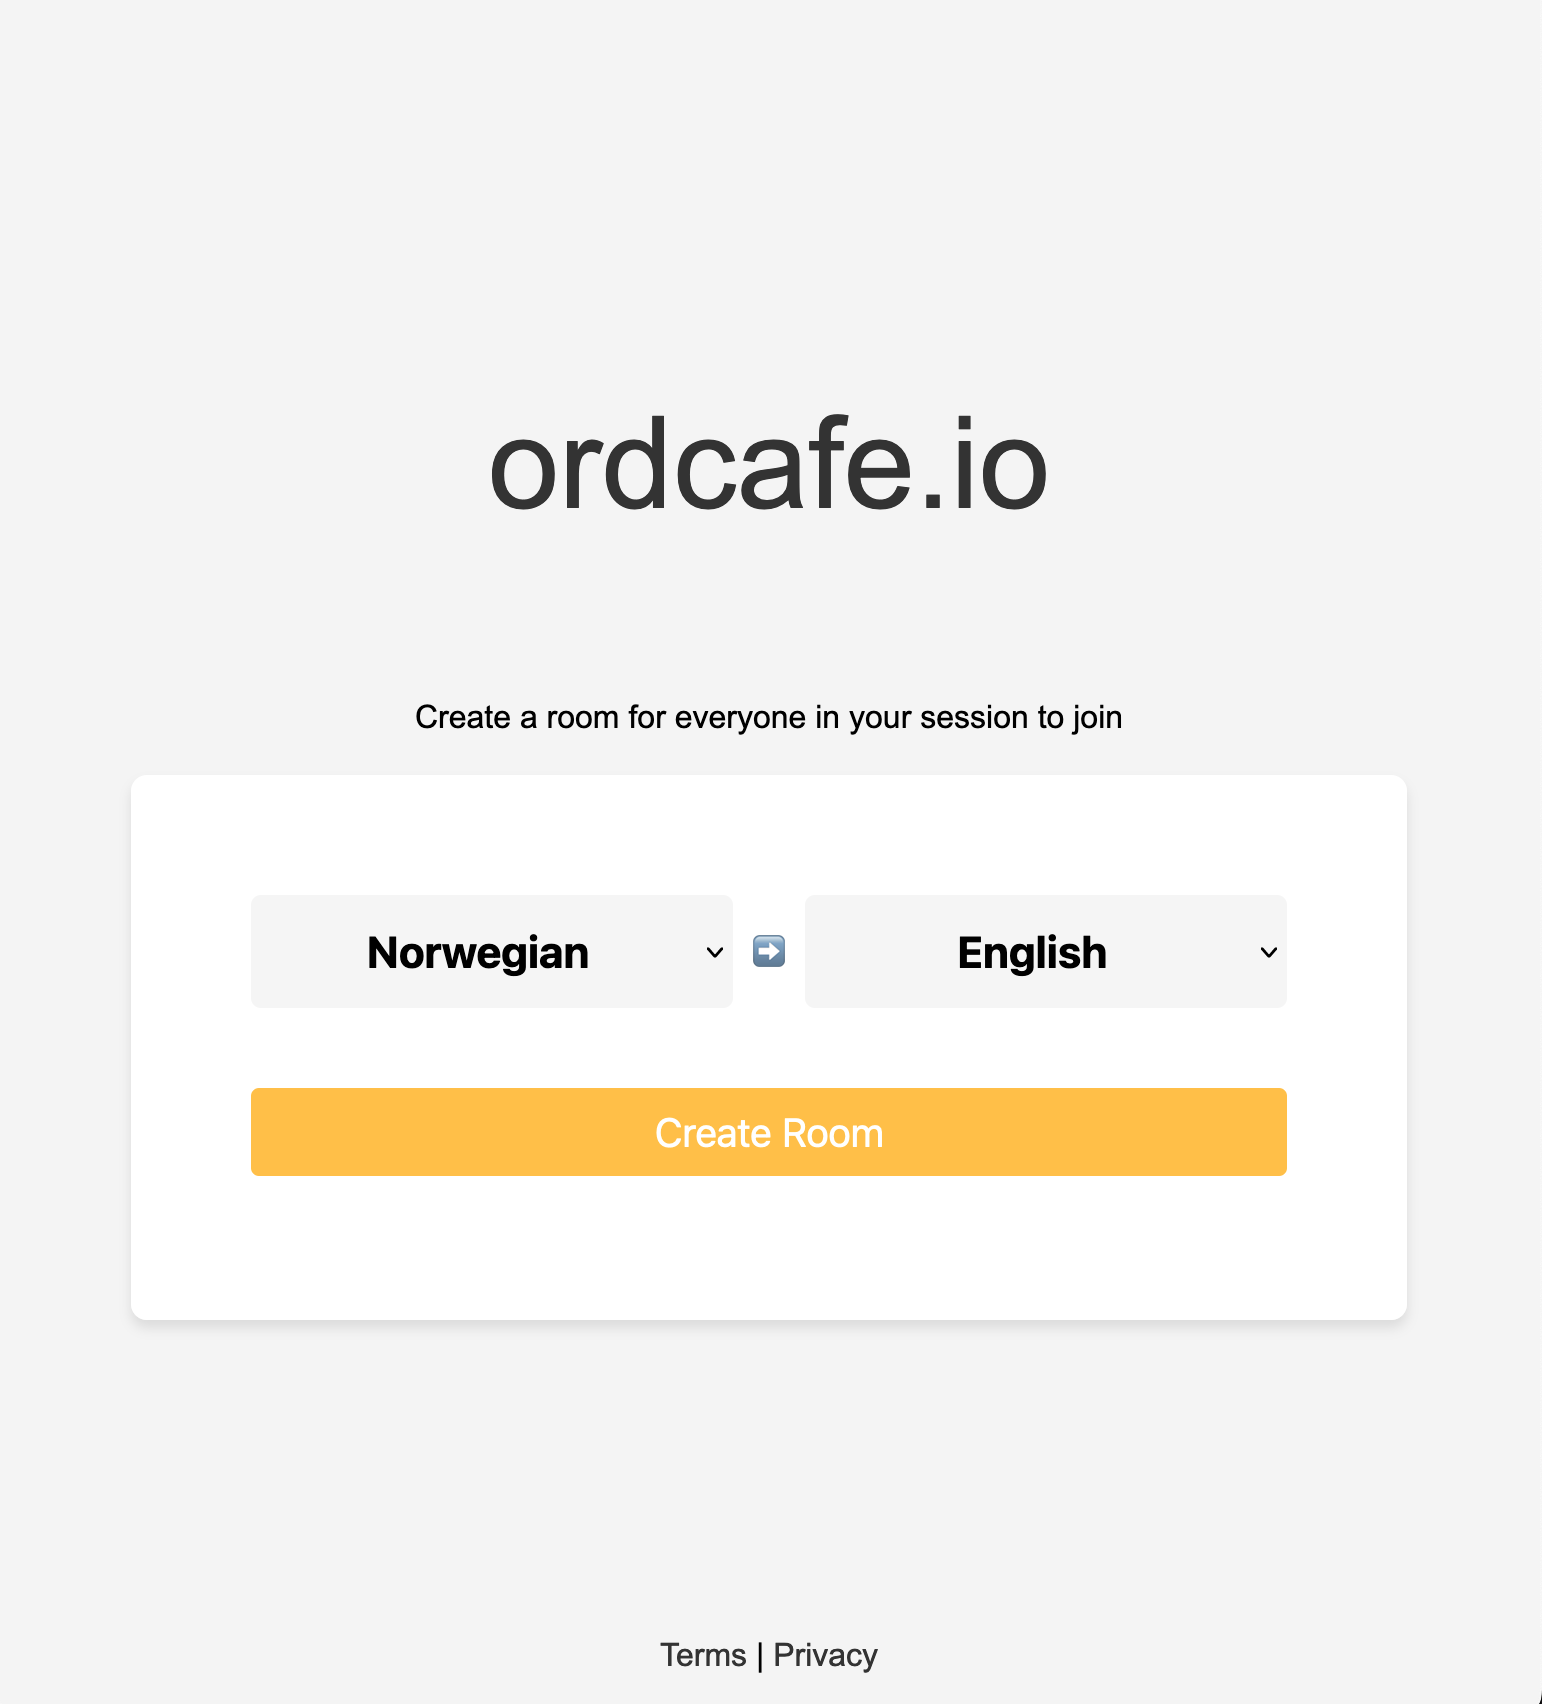 ordcafe.io language selection screen